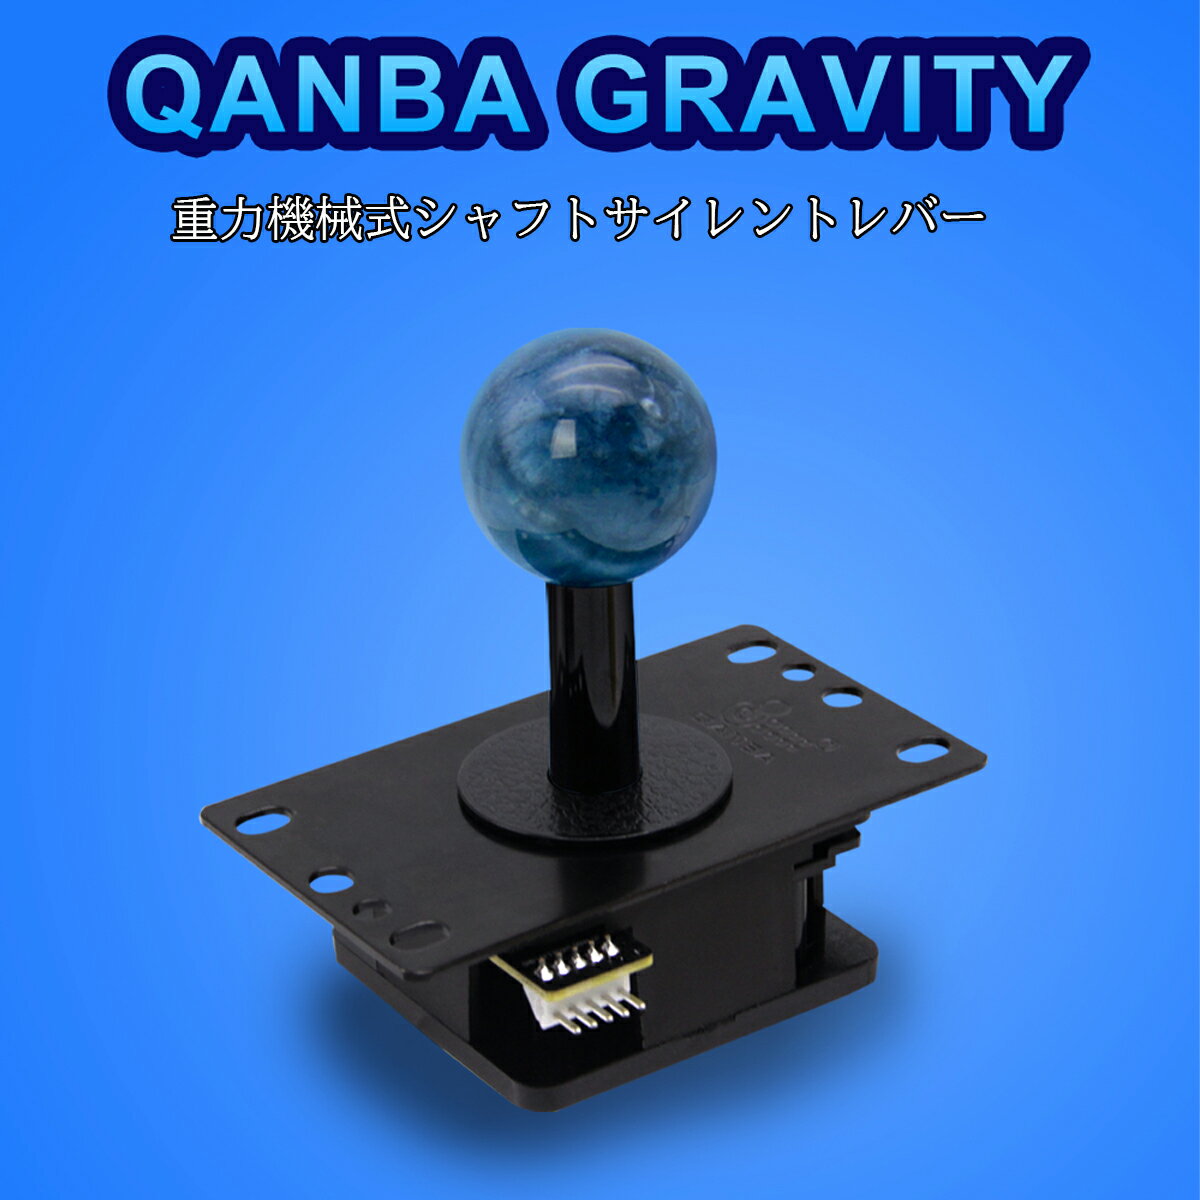 【Qanba正規品】Qanba Gravity クァンバ グラビティ メカニカル シャフト スイッチ 静音レバー レバーボール 四角ガイド 交換用 円形ガイド 標準スプリング 交換用 0.5倍弾力 2倍弾力 スプリング ディスク シャフトカバー 付属